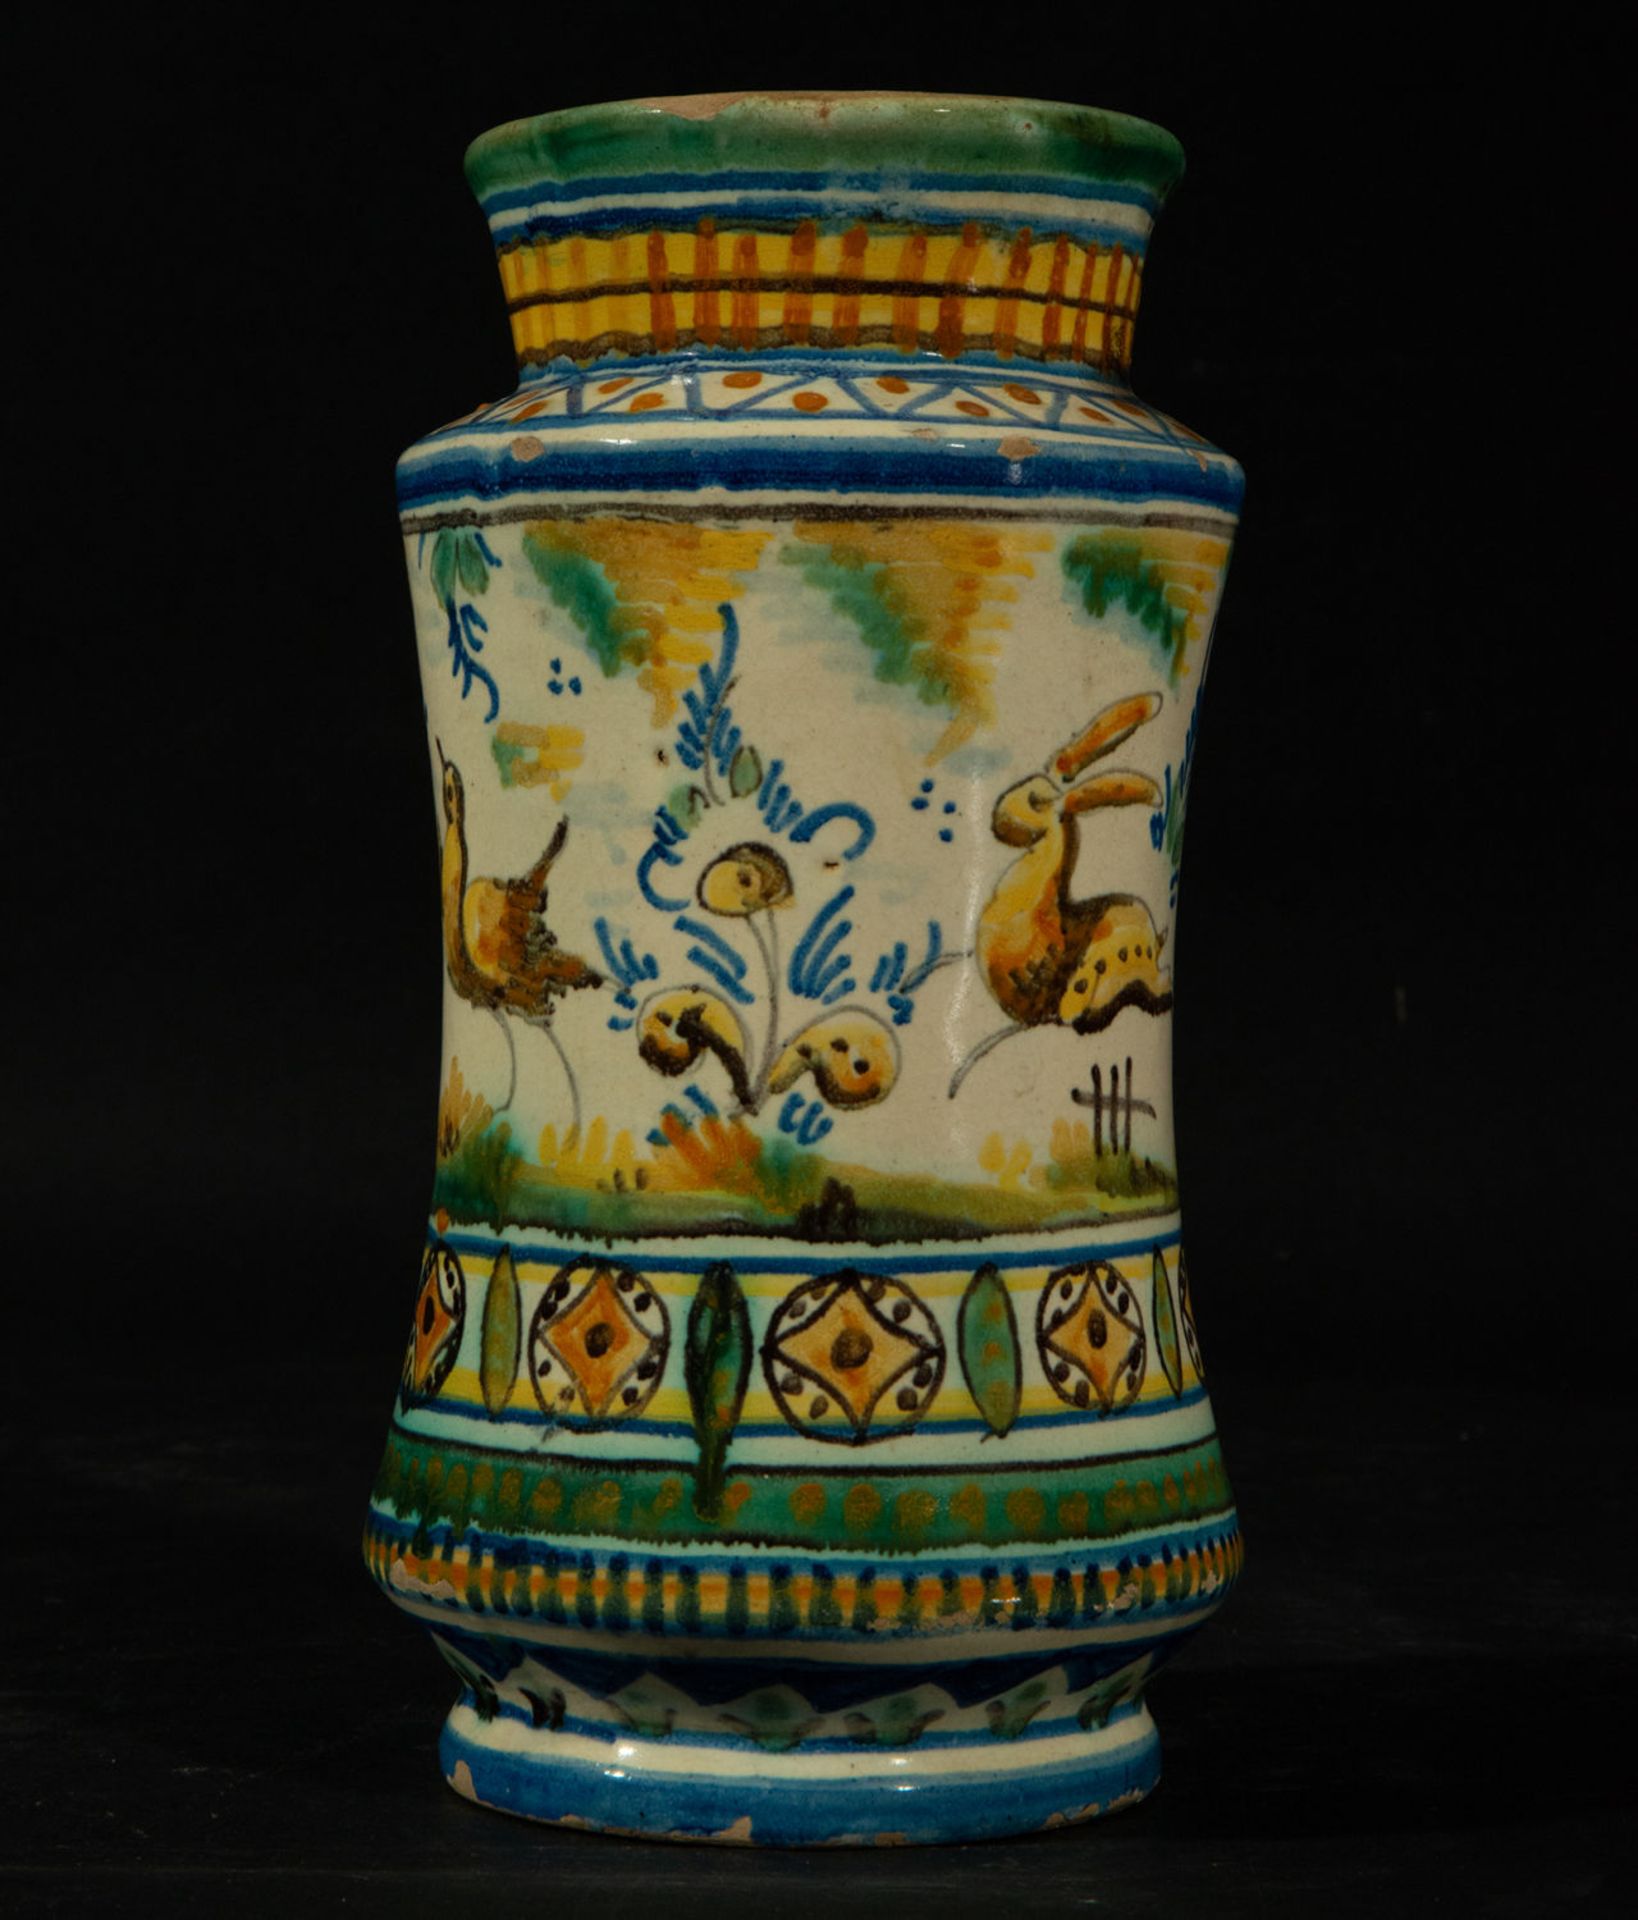 Ceramic Pharmacy Jar from Triana, Hare series, 18th - 19th century - Image 3 of 6